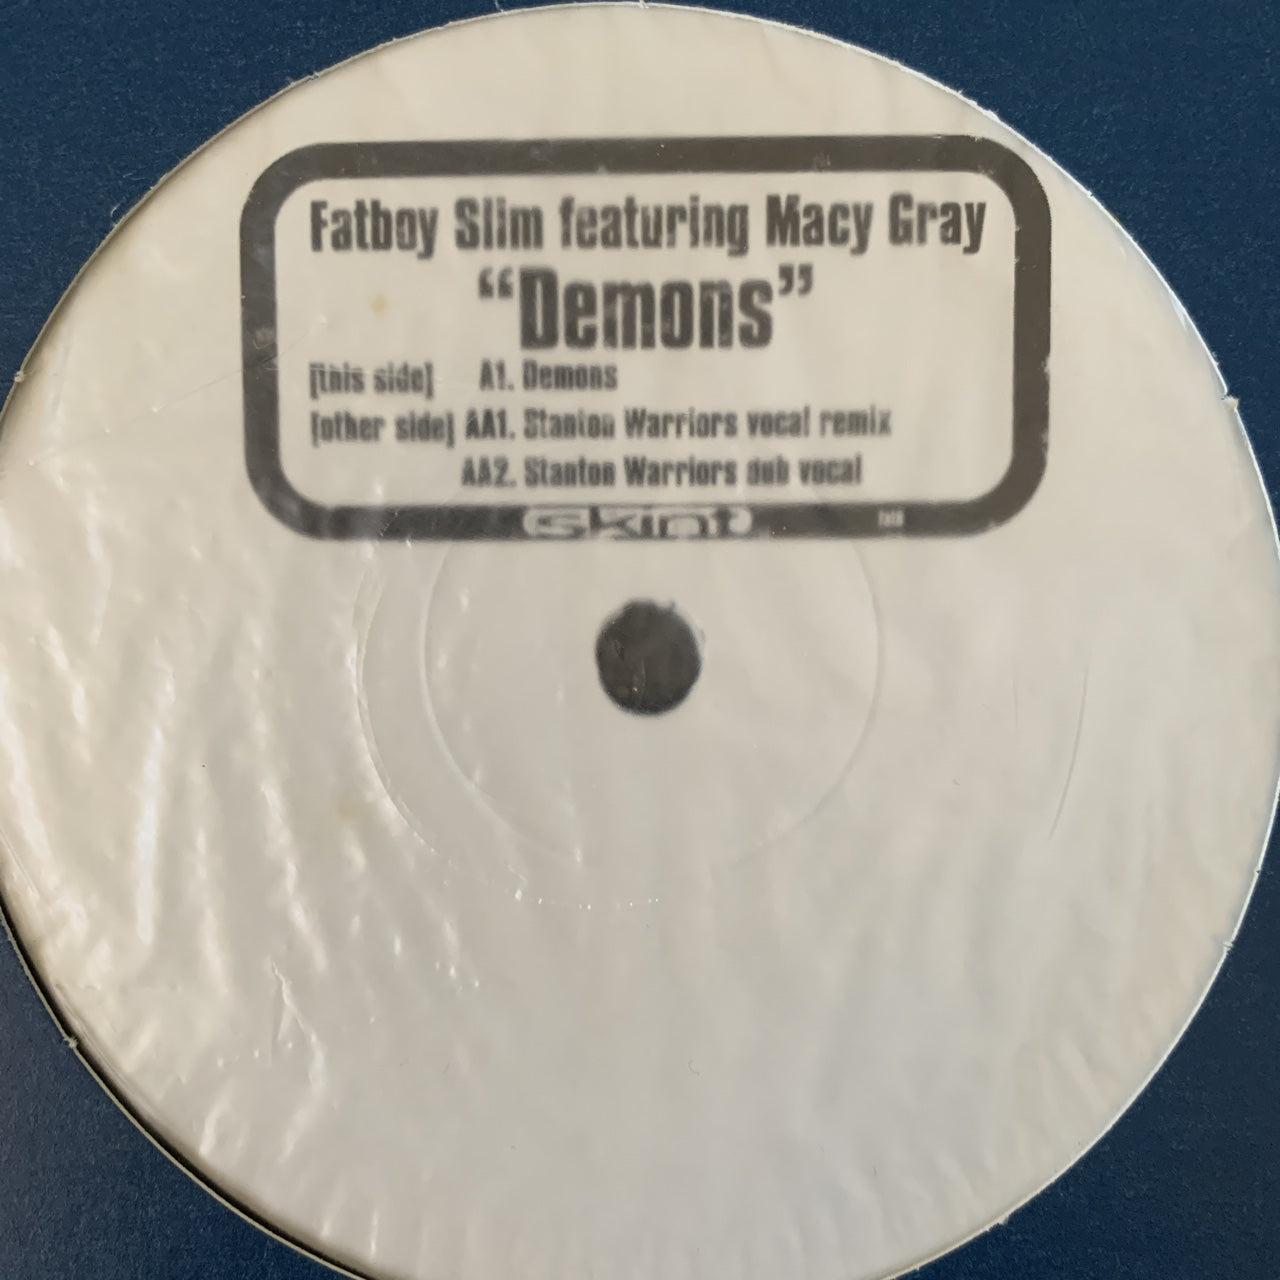 Fatboy Slim “Demons” Feat Macy Gray